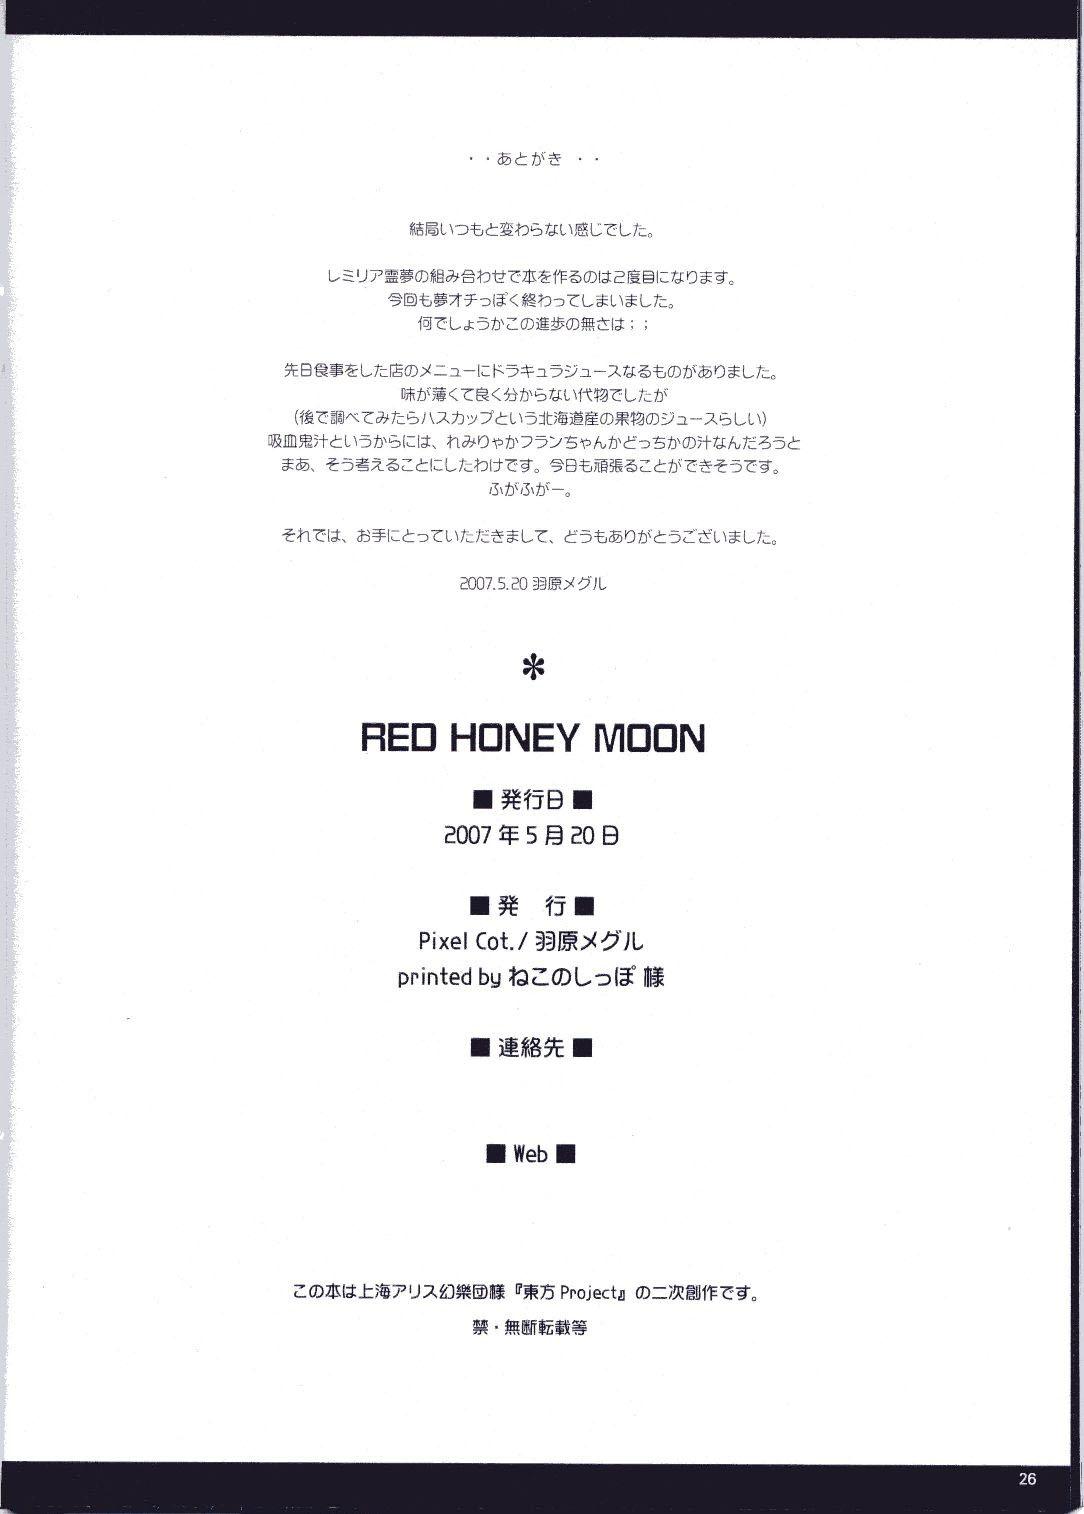 Red Honey Moon 24